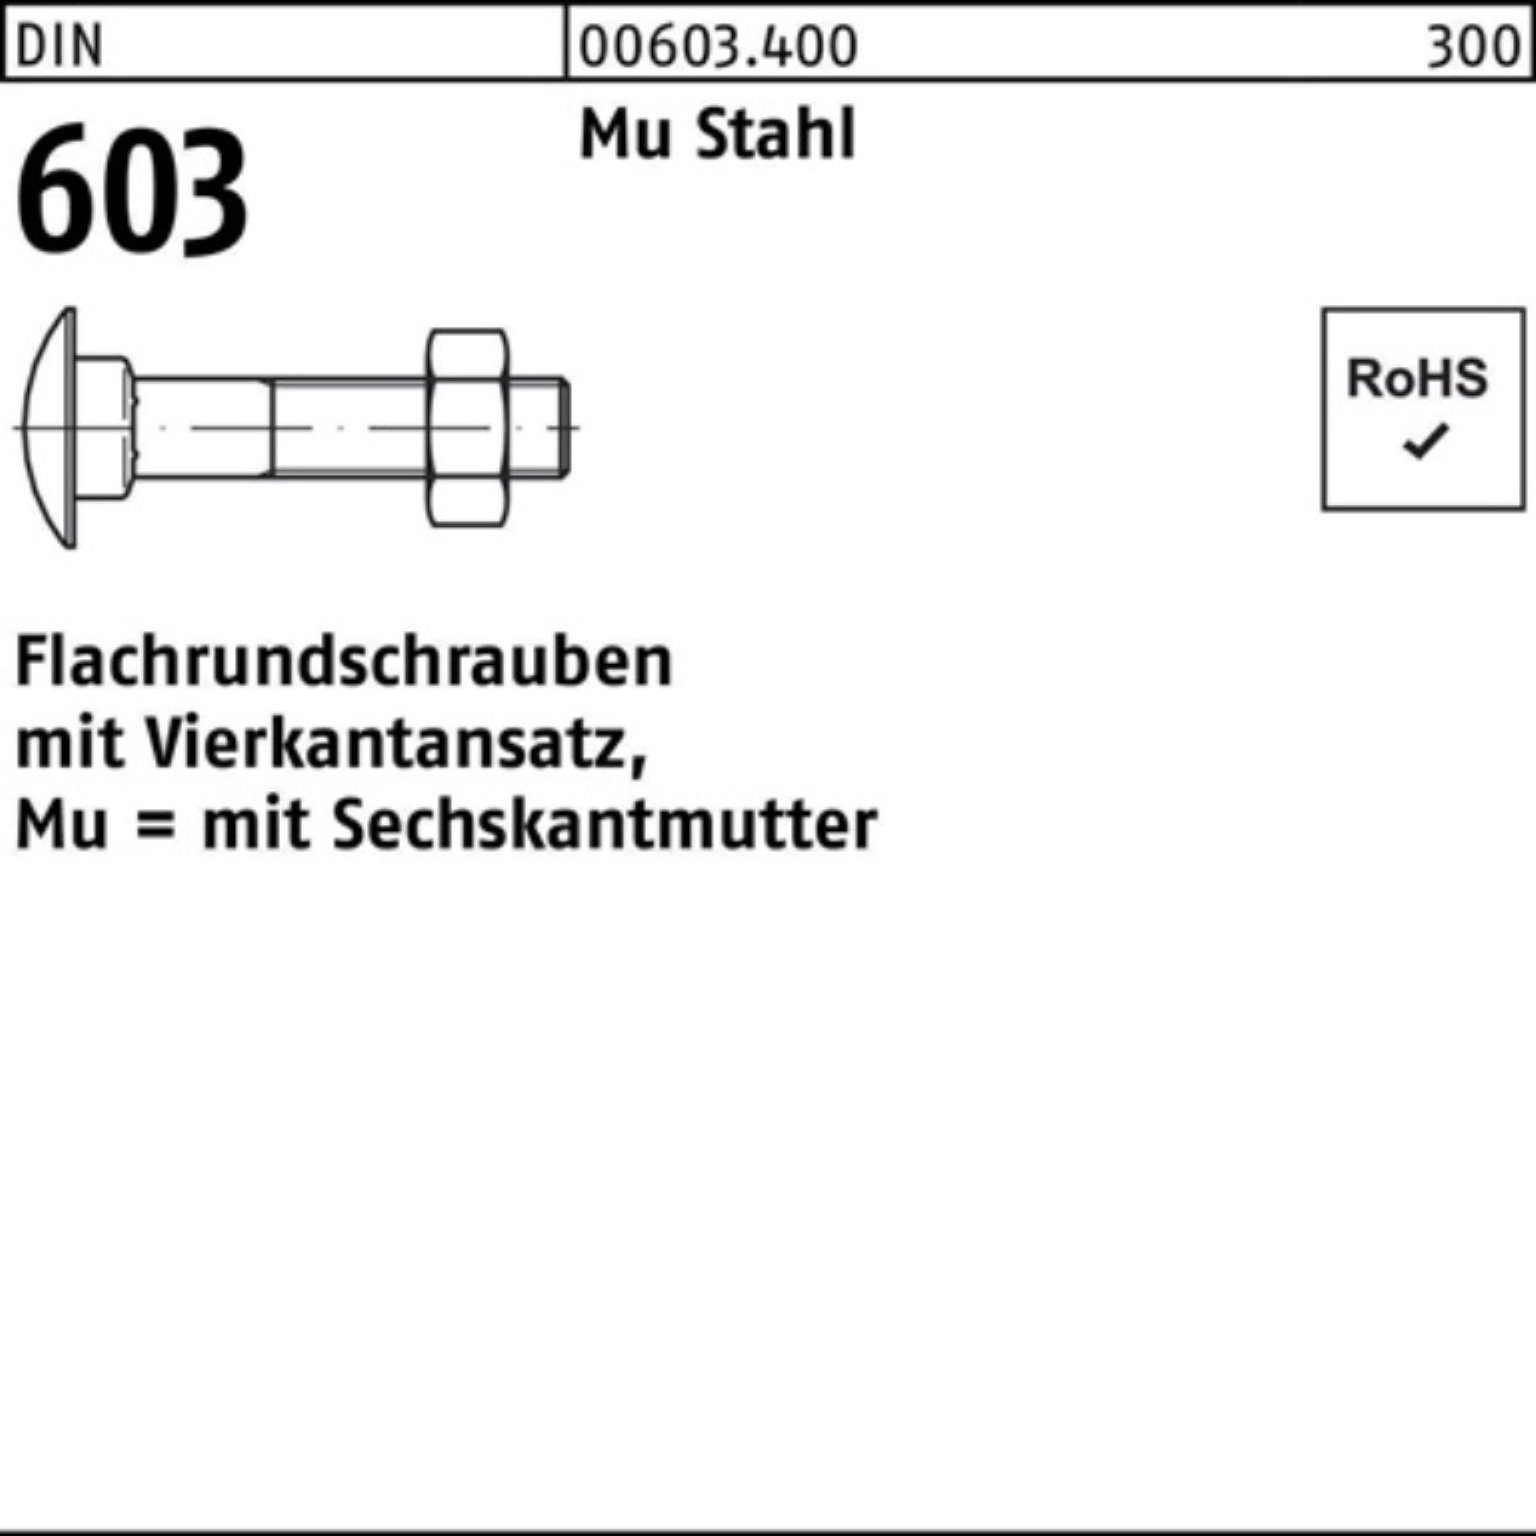 Reyher Schraube Vierkantansatz/6-ktmutter Flachrundschraube DIN 100er 603 Pack M12x60